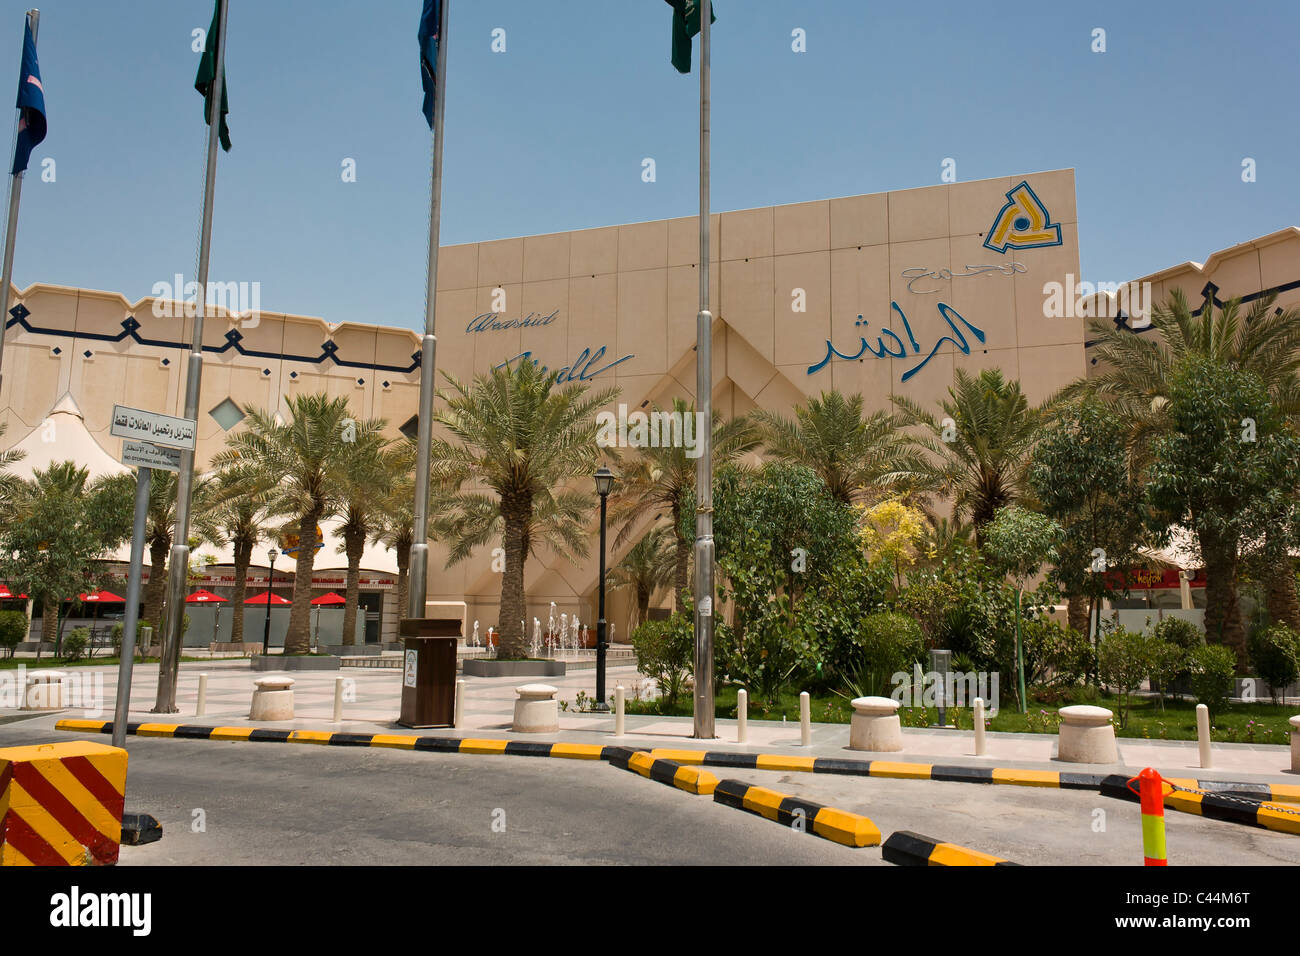 Al Rashed: Mall, Khobar, Reino de Arabia Saudita Fotografía de stock - Alamy